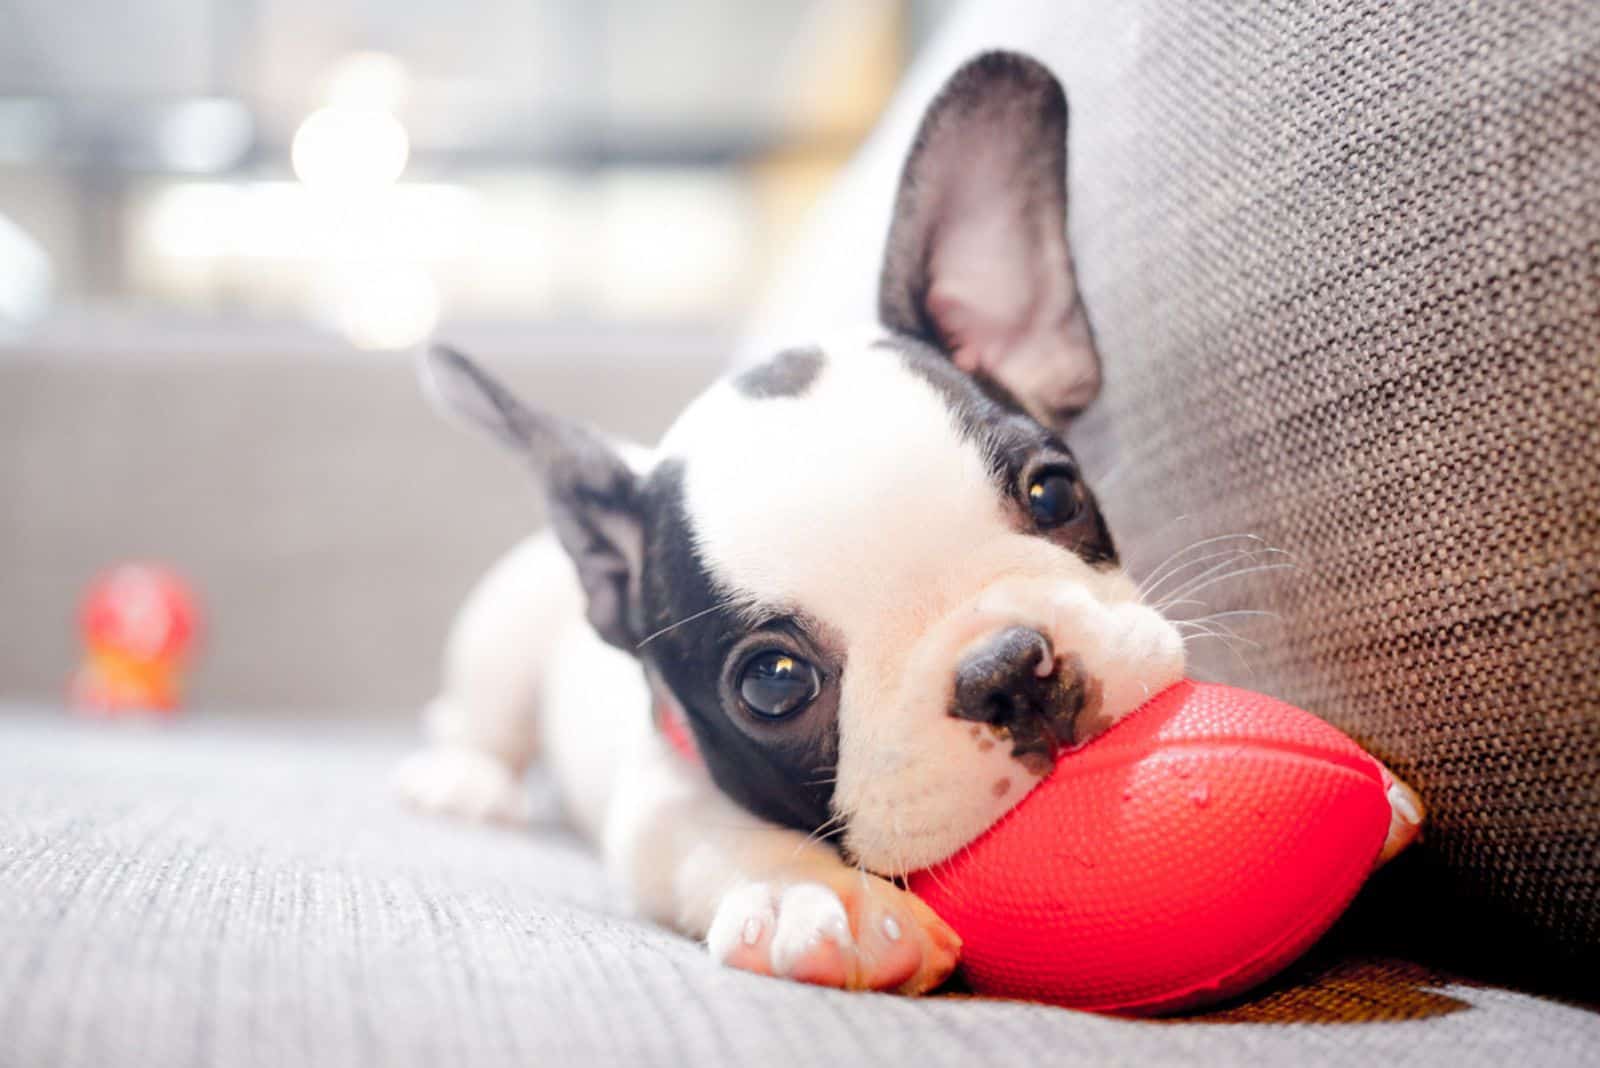 french bulldog puppy biting a ball toy